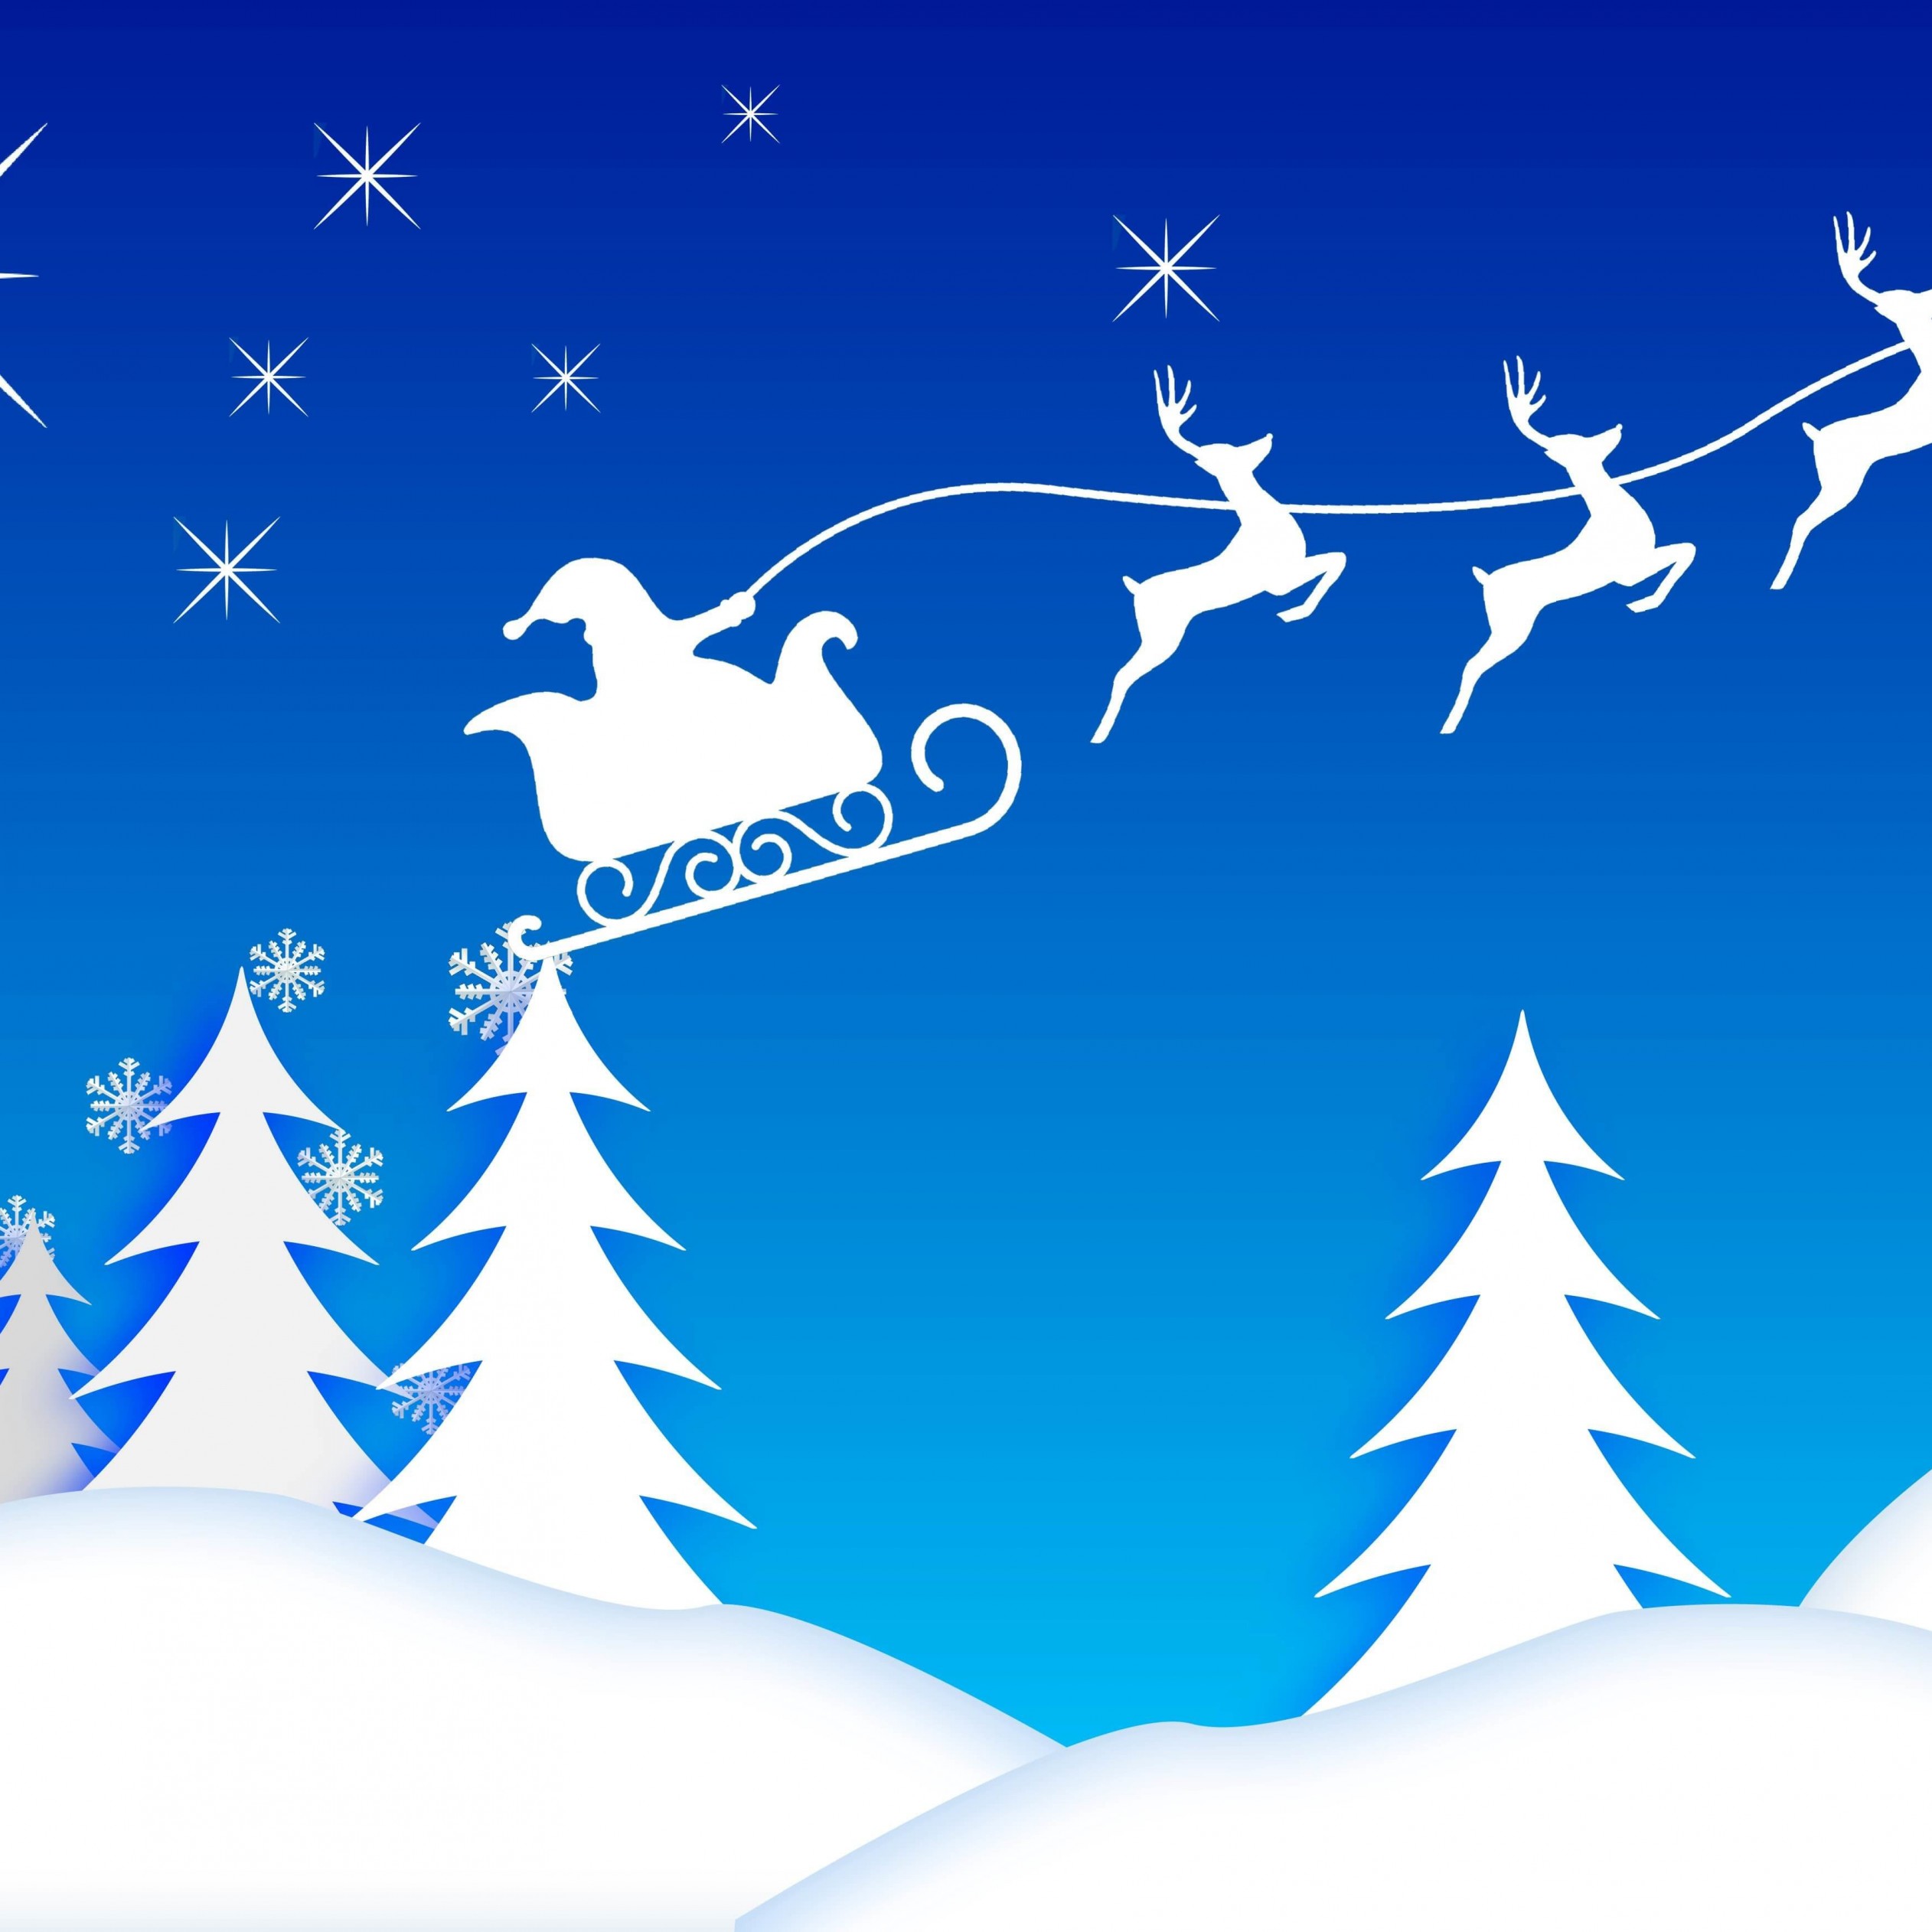 Santa’s Sleigh Illustration Wallpaper for Apple iPad 4